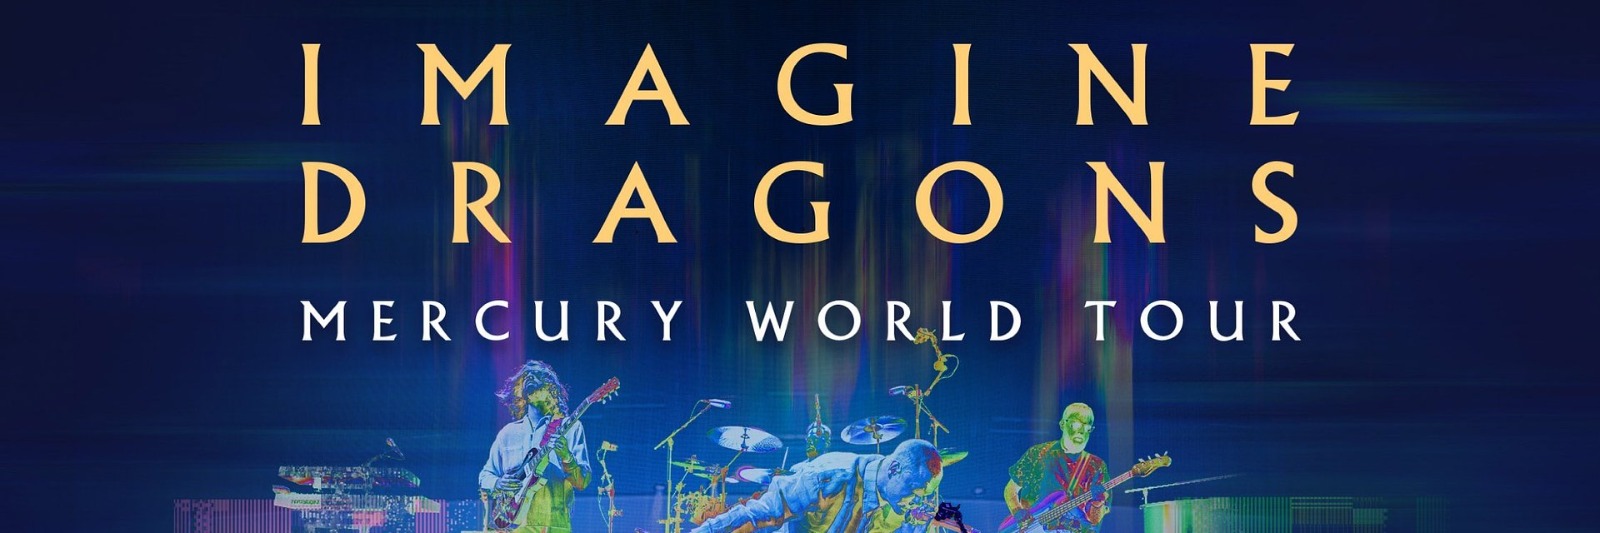 Imagine Dragons llevará su "Mercury World Tour" a Monterrey en mayo 2023 6